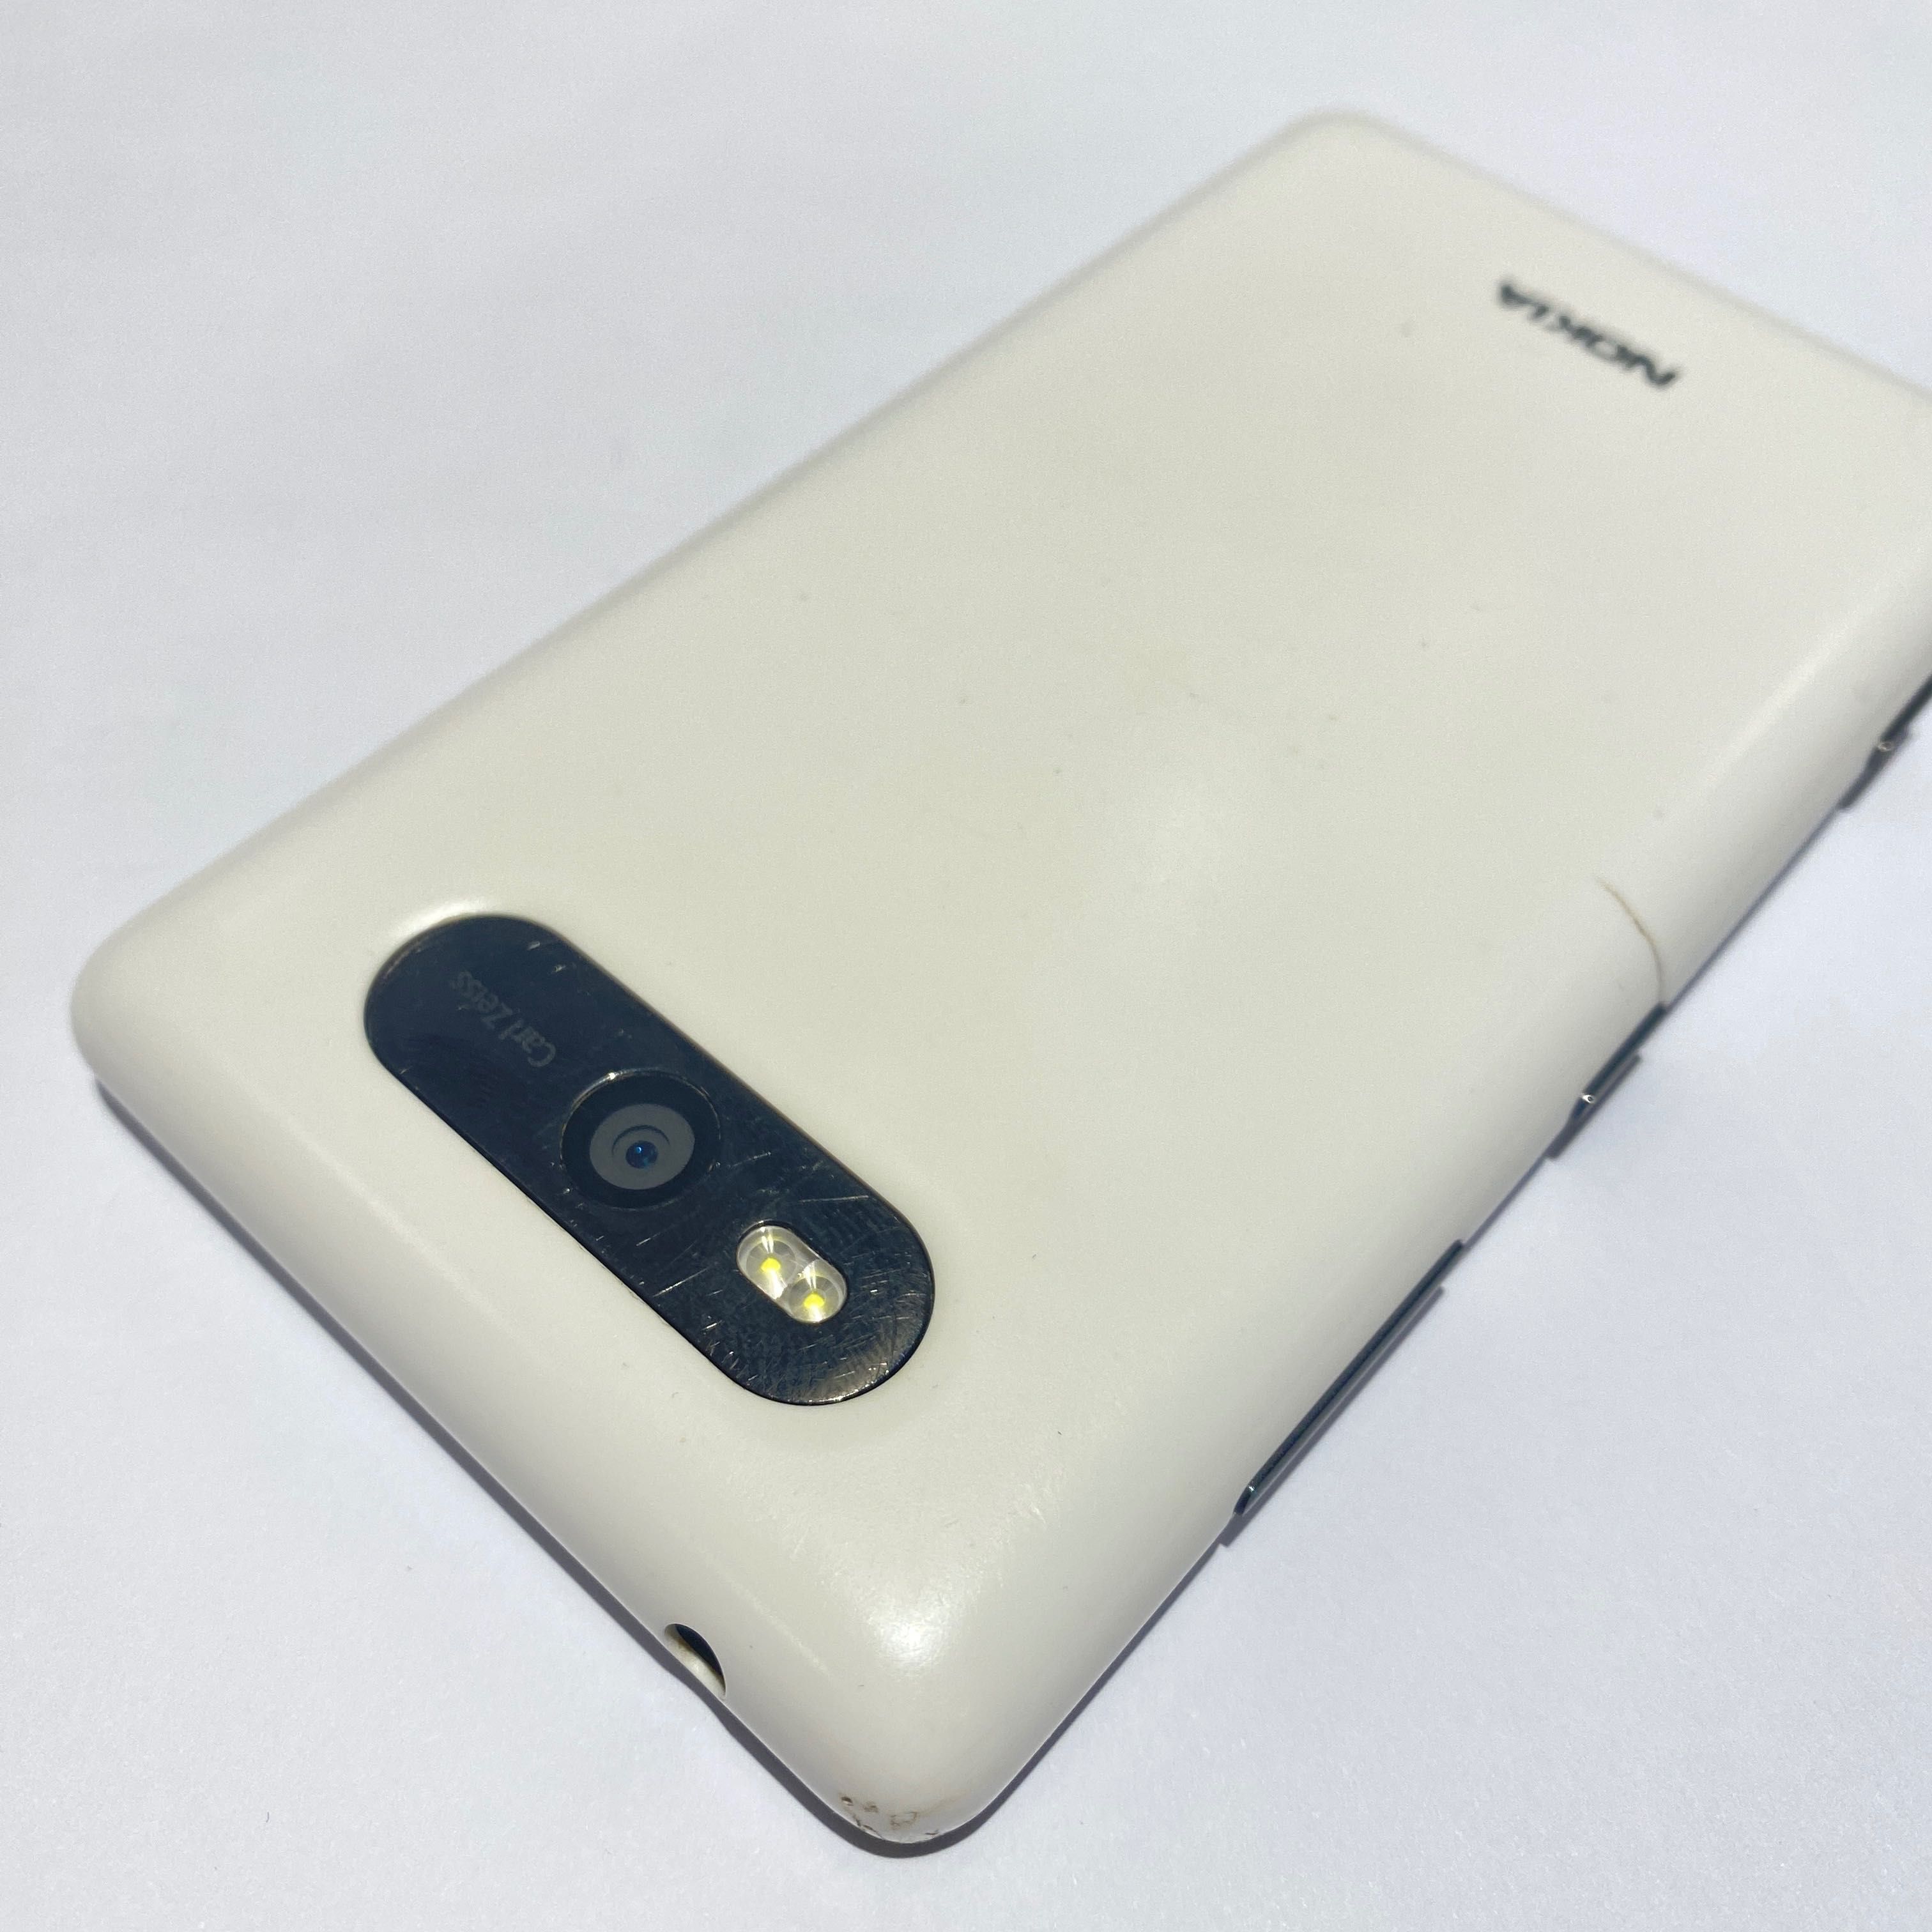 Nokia Lumia 820L